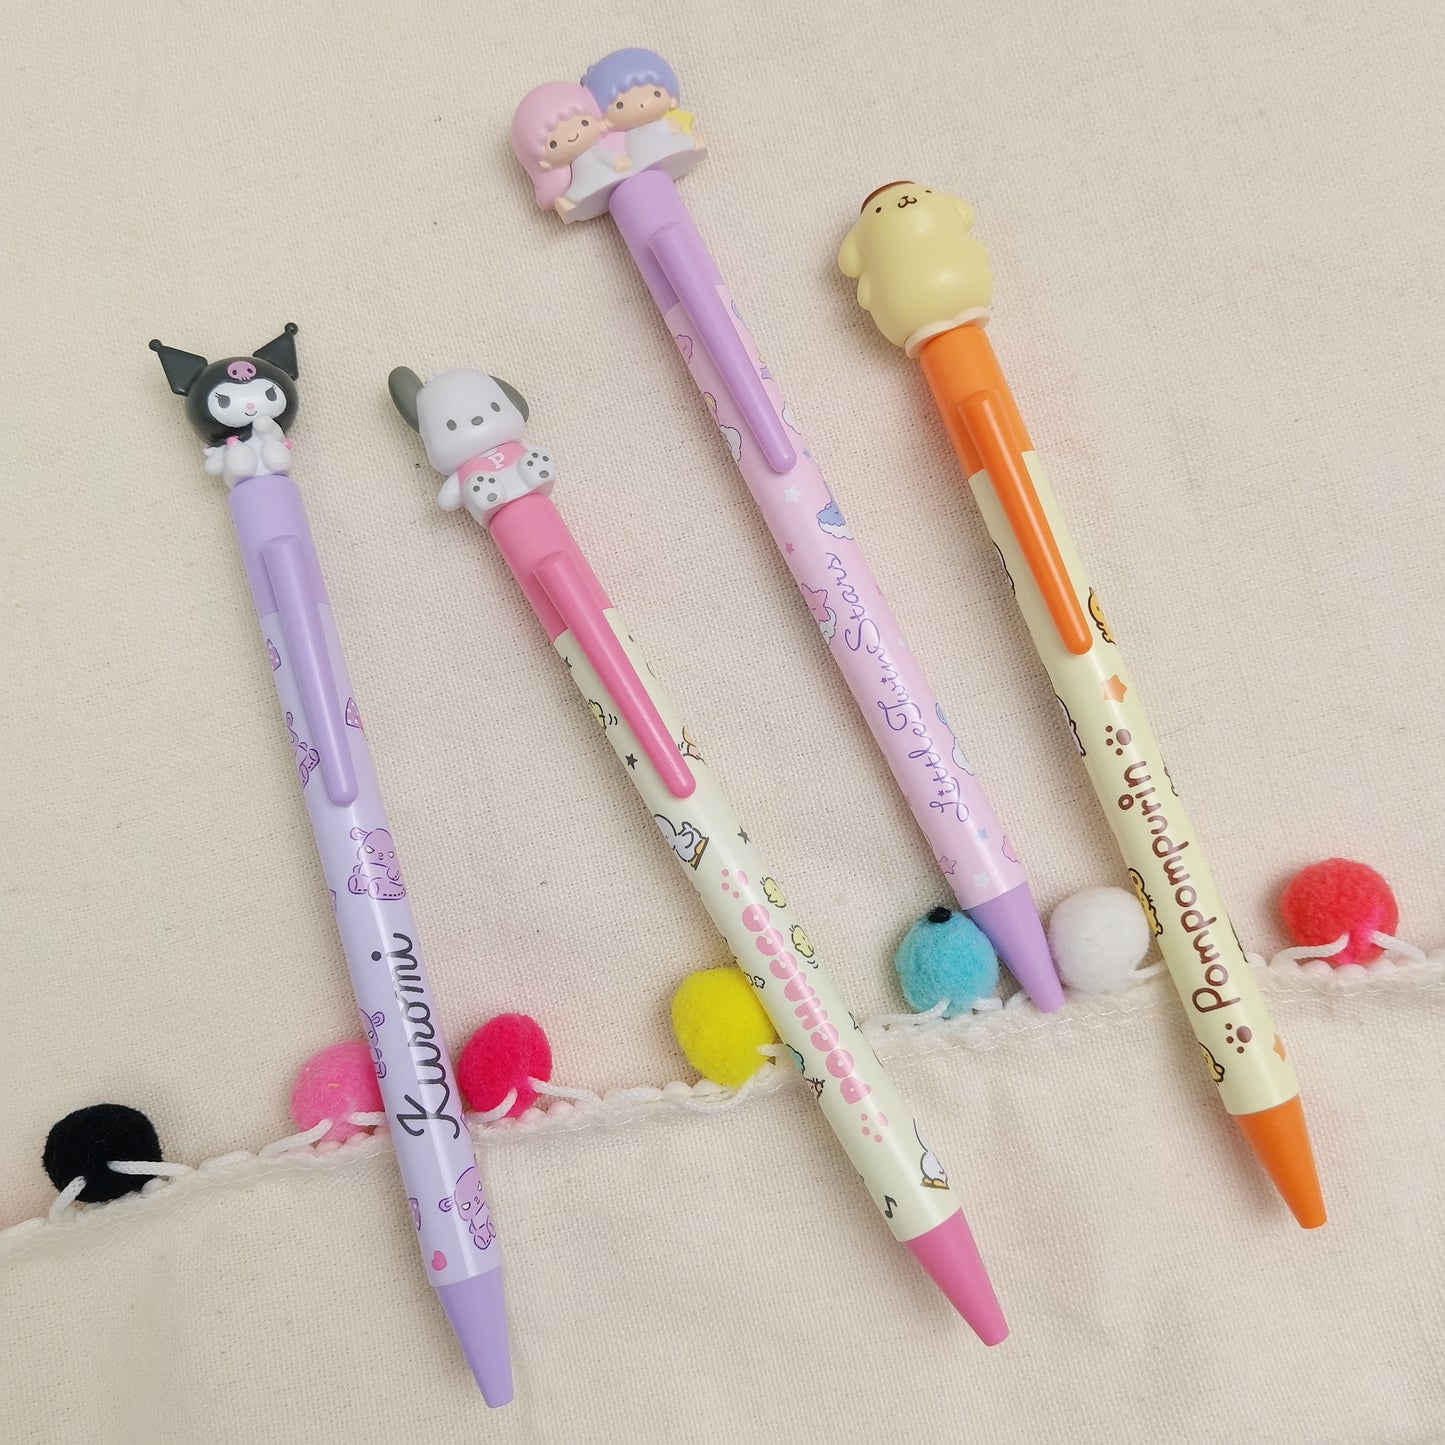 Sanrio Mascot Limited Edition Ballpoint Pen - 0.5 mm